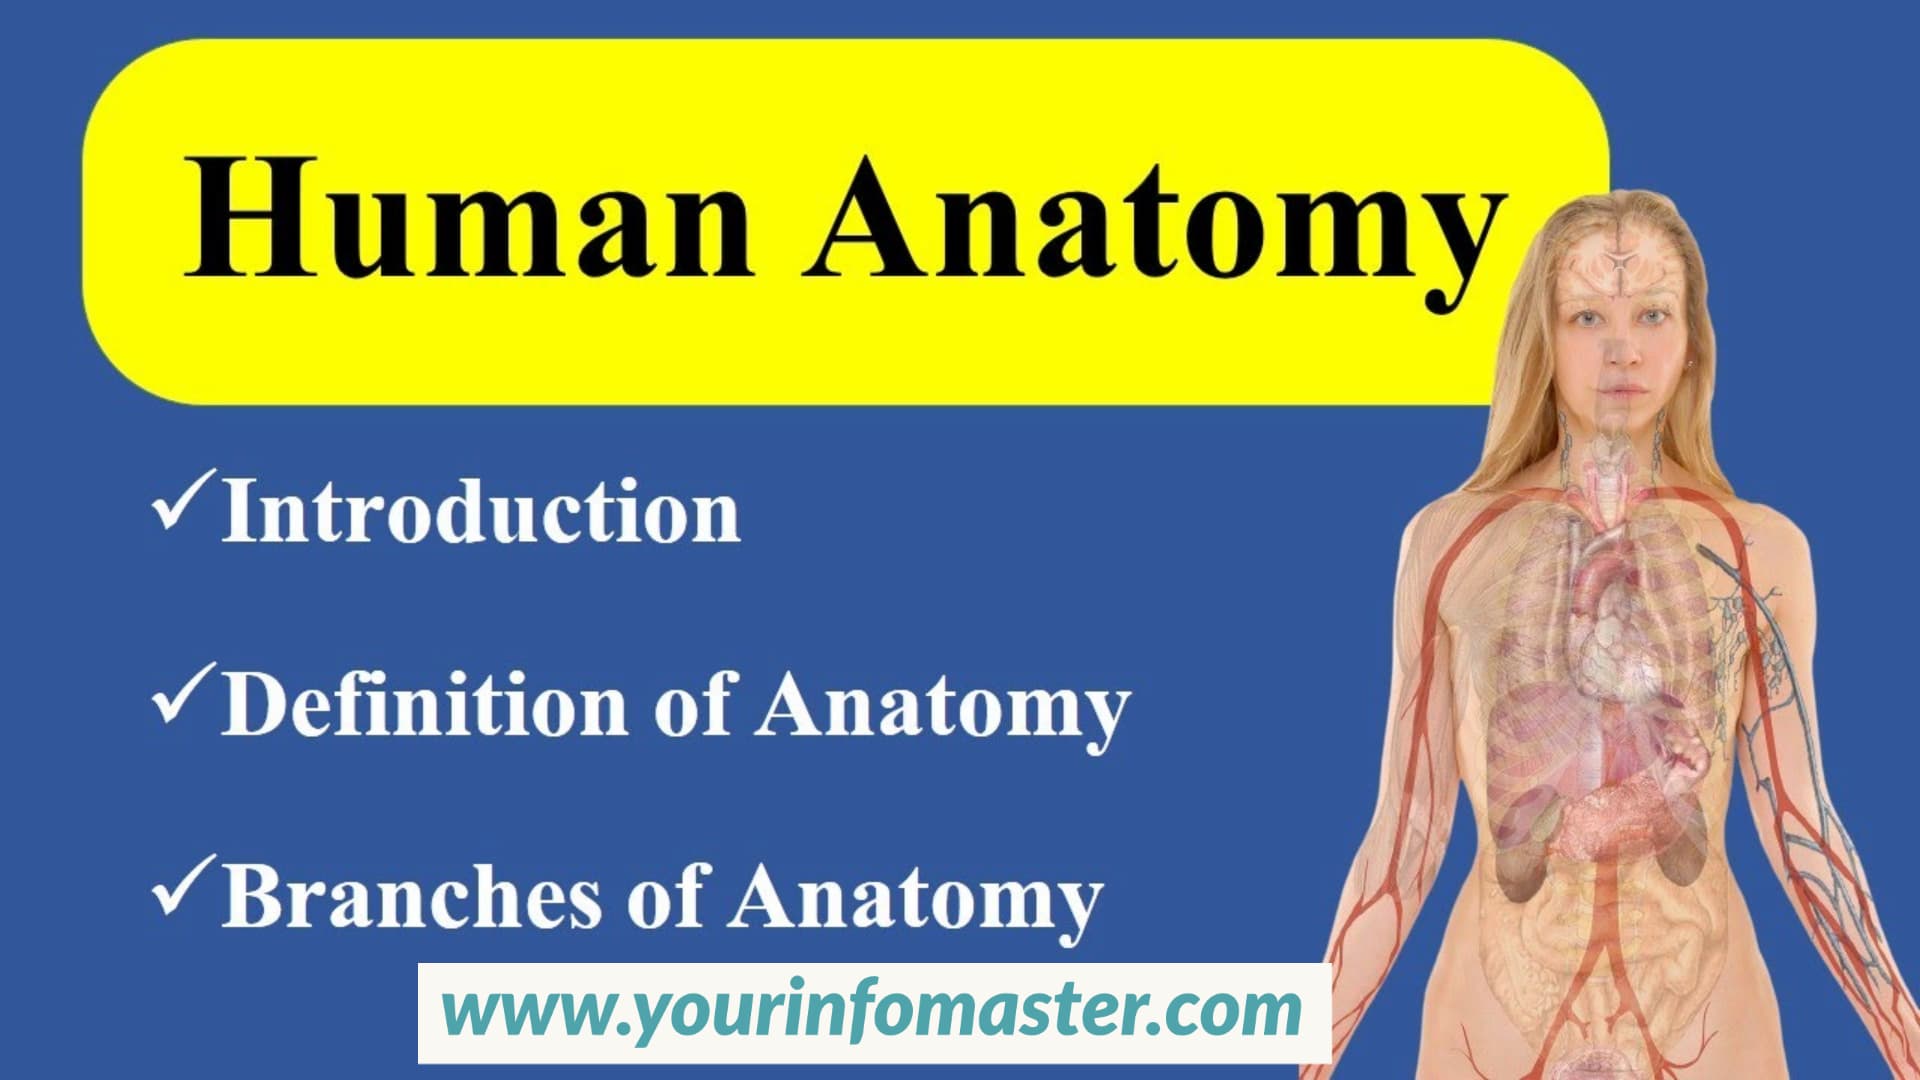 Anatomy, branches of anatomy, types of anatomy, what is anatomy, gross anatomy, macro anatomy, micro anatomy, regional anatomy, systemic anatomy, cytology, biology, physiology, applied anatomy, cross section anatomy, embryology, histology, pathological anatomy, developmental anatomy, radiology